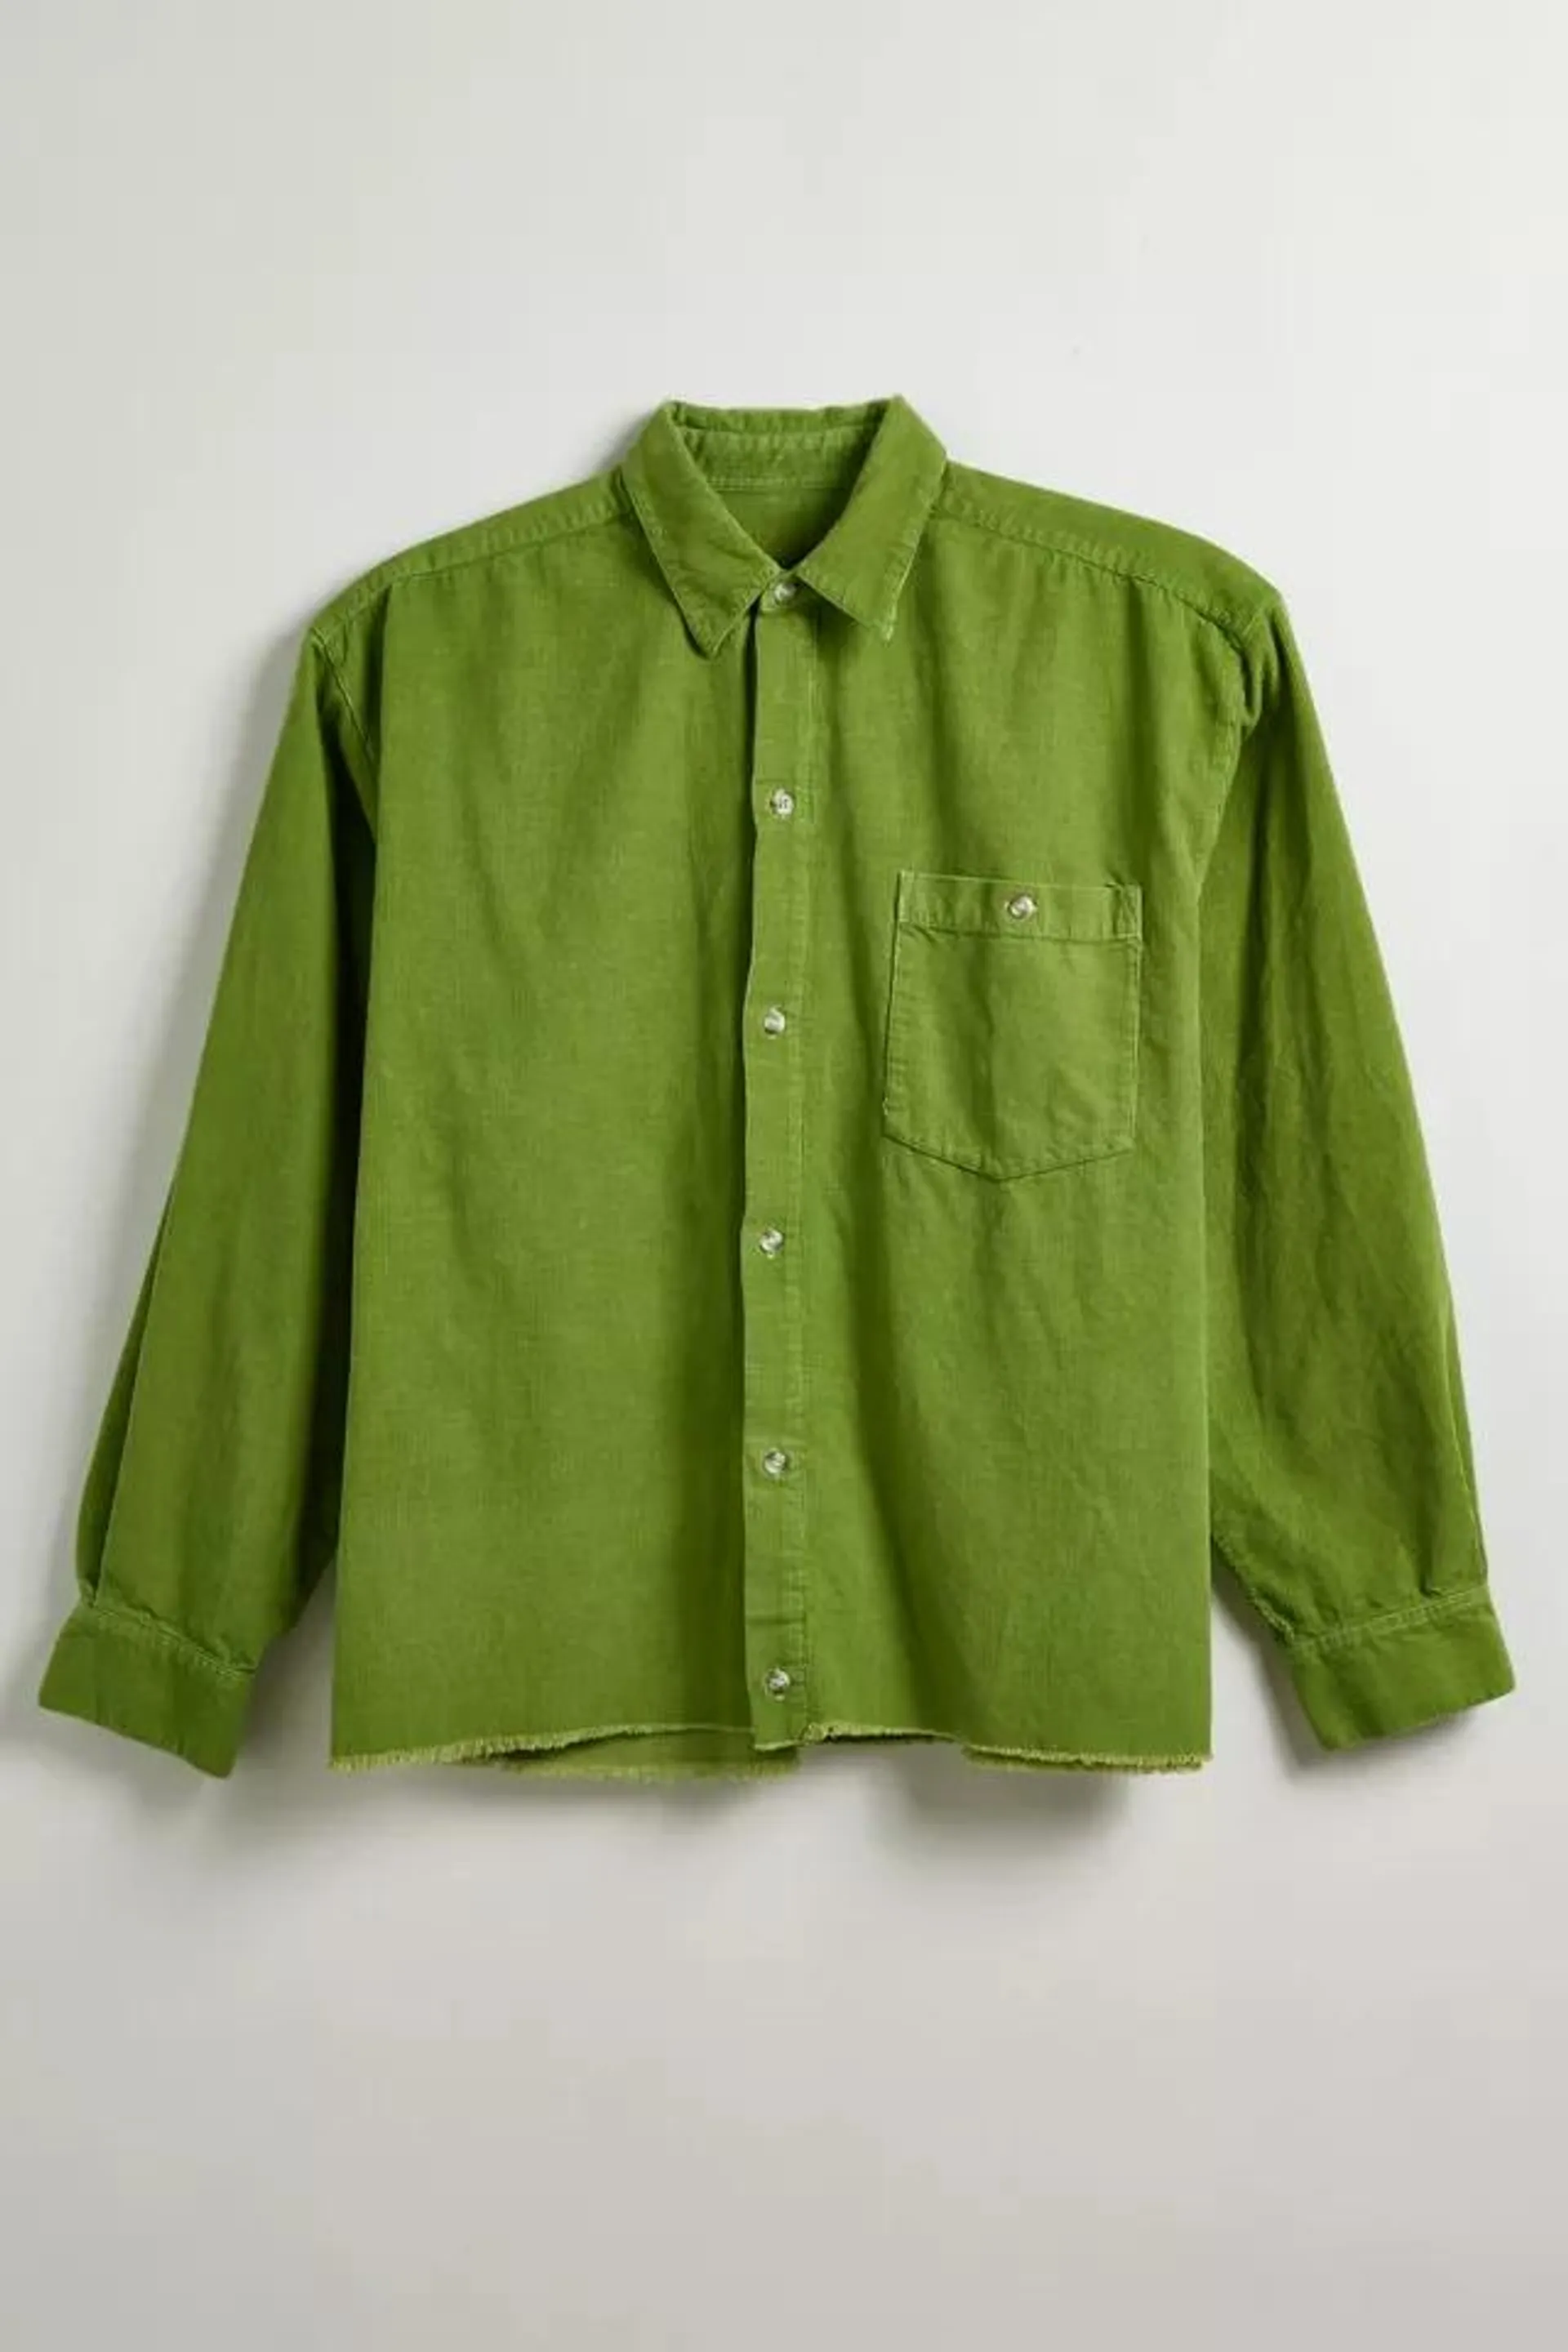 Urban Renewal Remade Overdyed Raw Crop Cord Long Sleeve Shirt